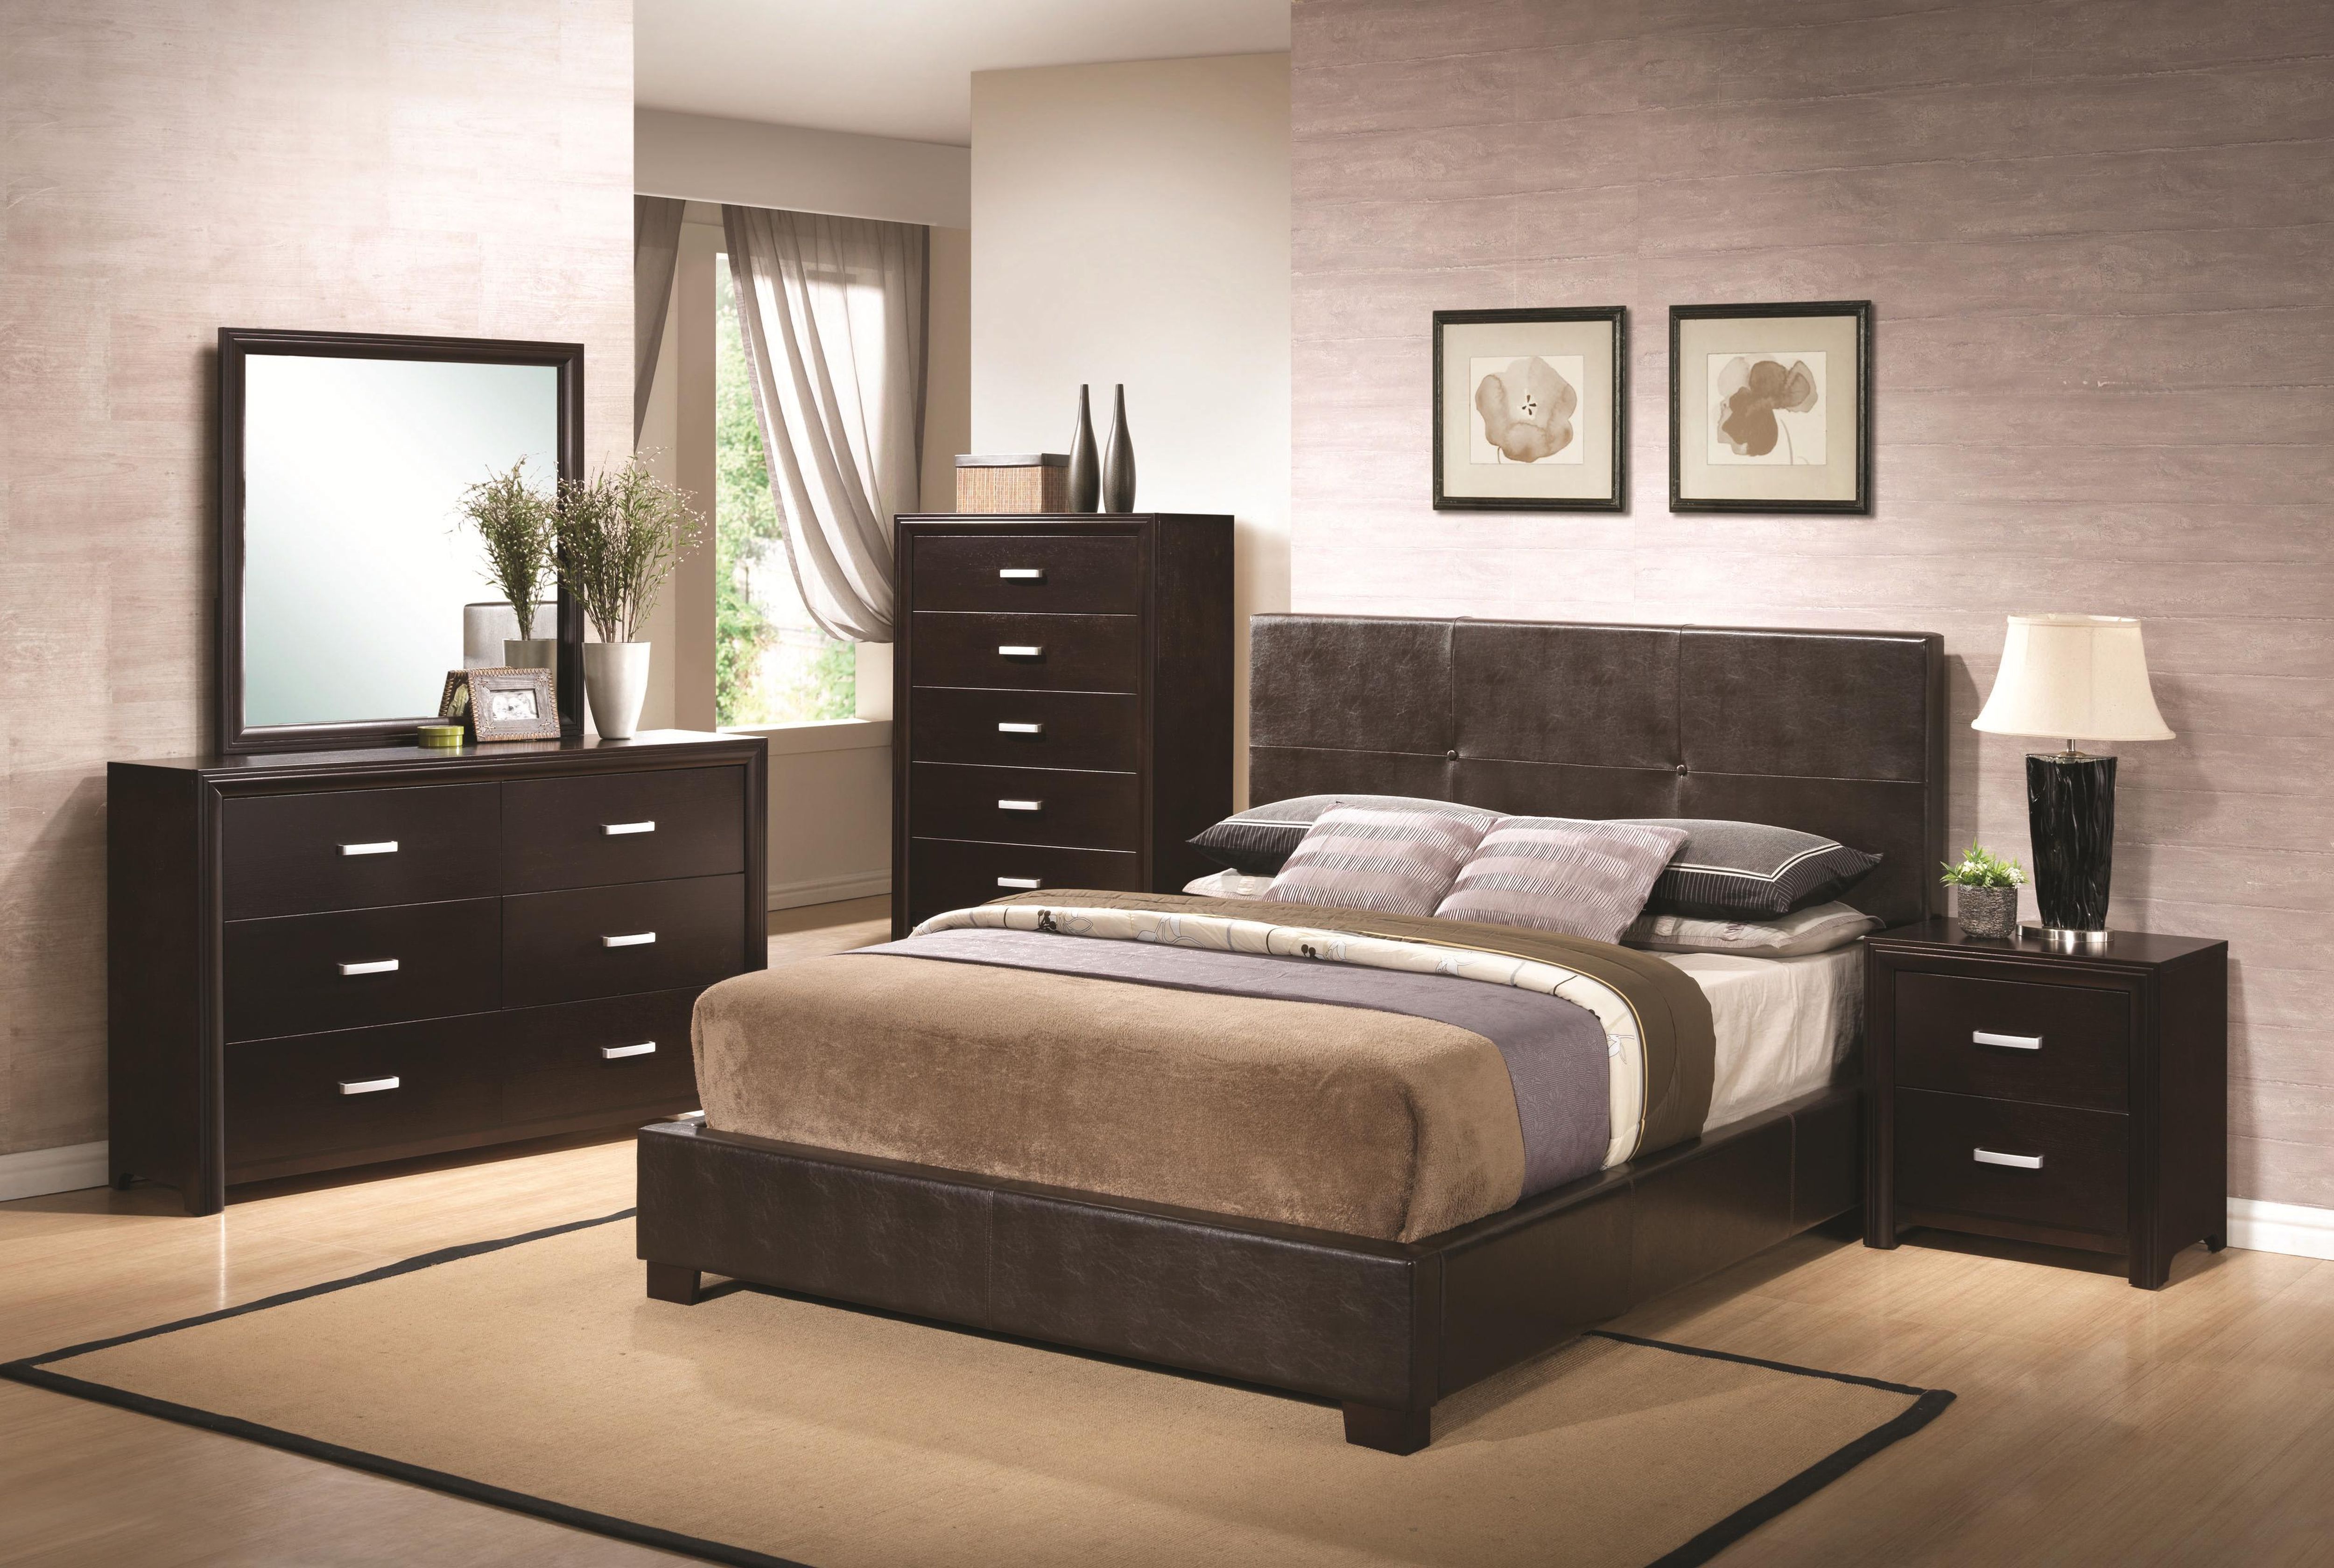 ikea atlanta bedroom furniture